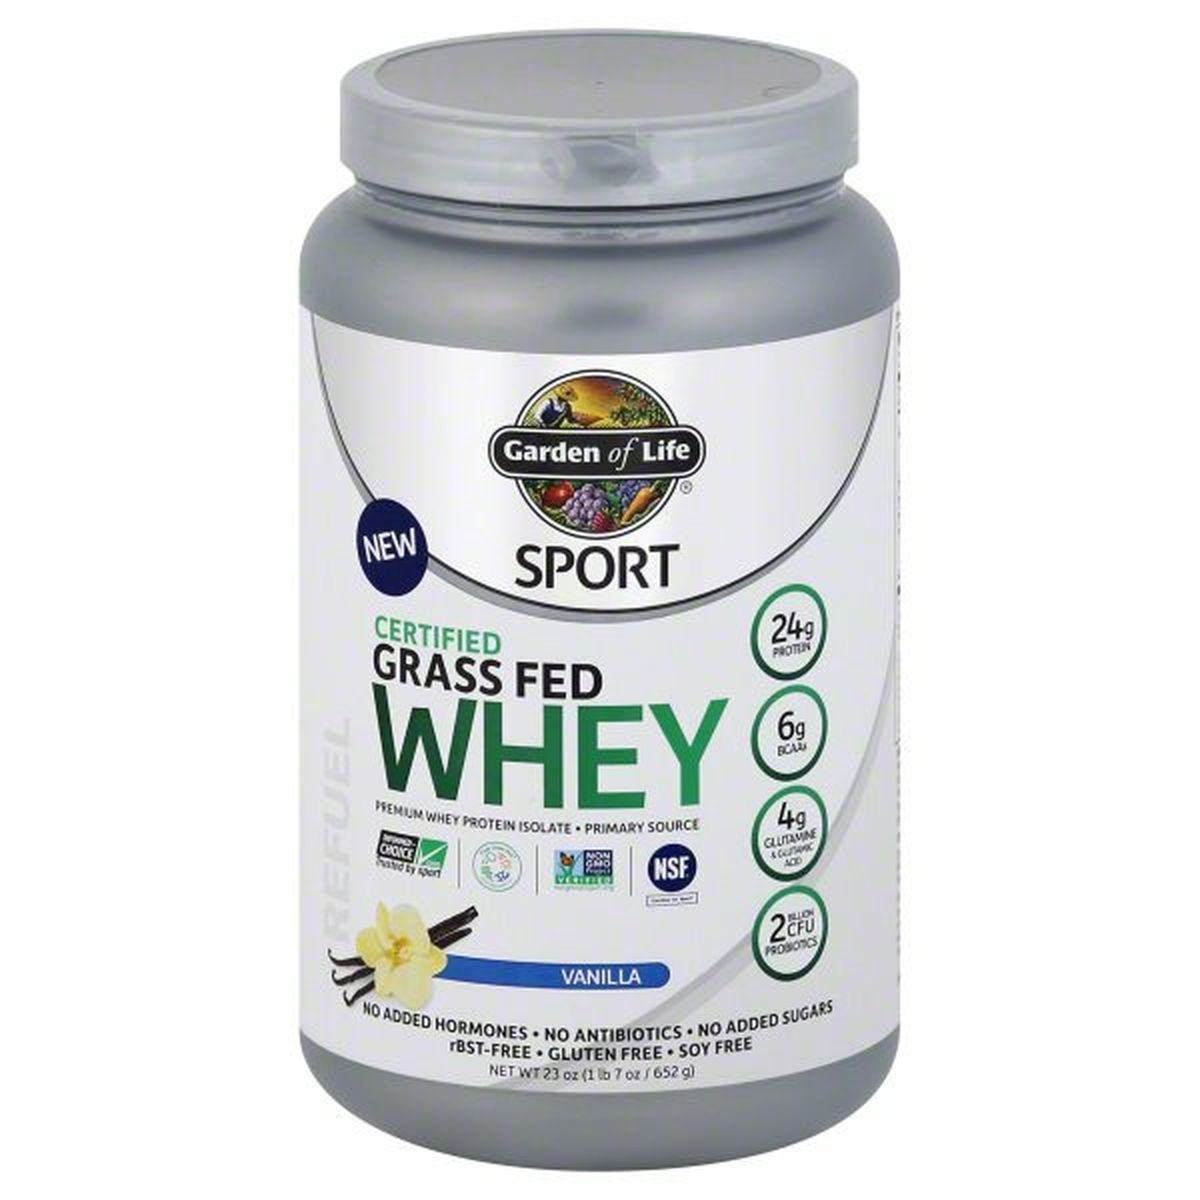 Calories in Garden of Life Sport Whey, Certified Grass Fed, Vanilla